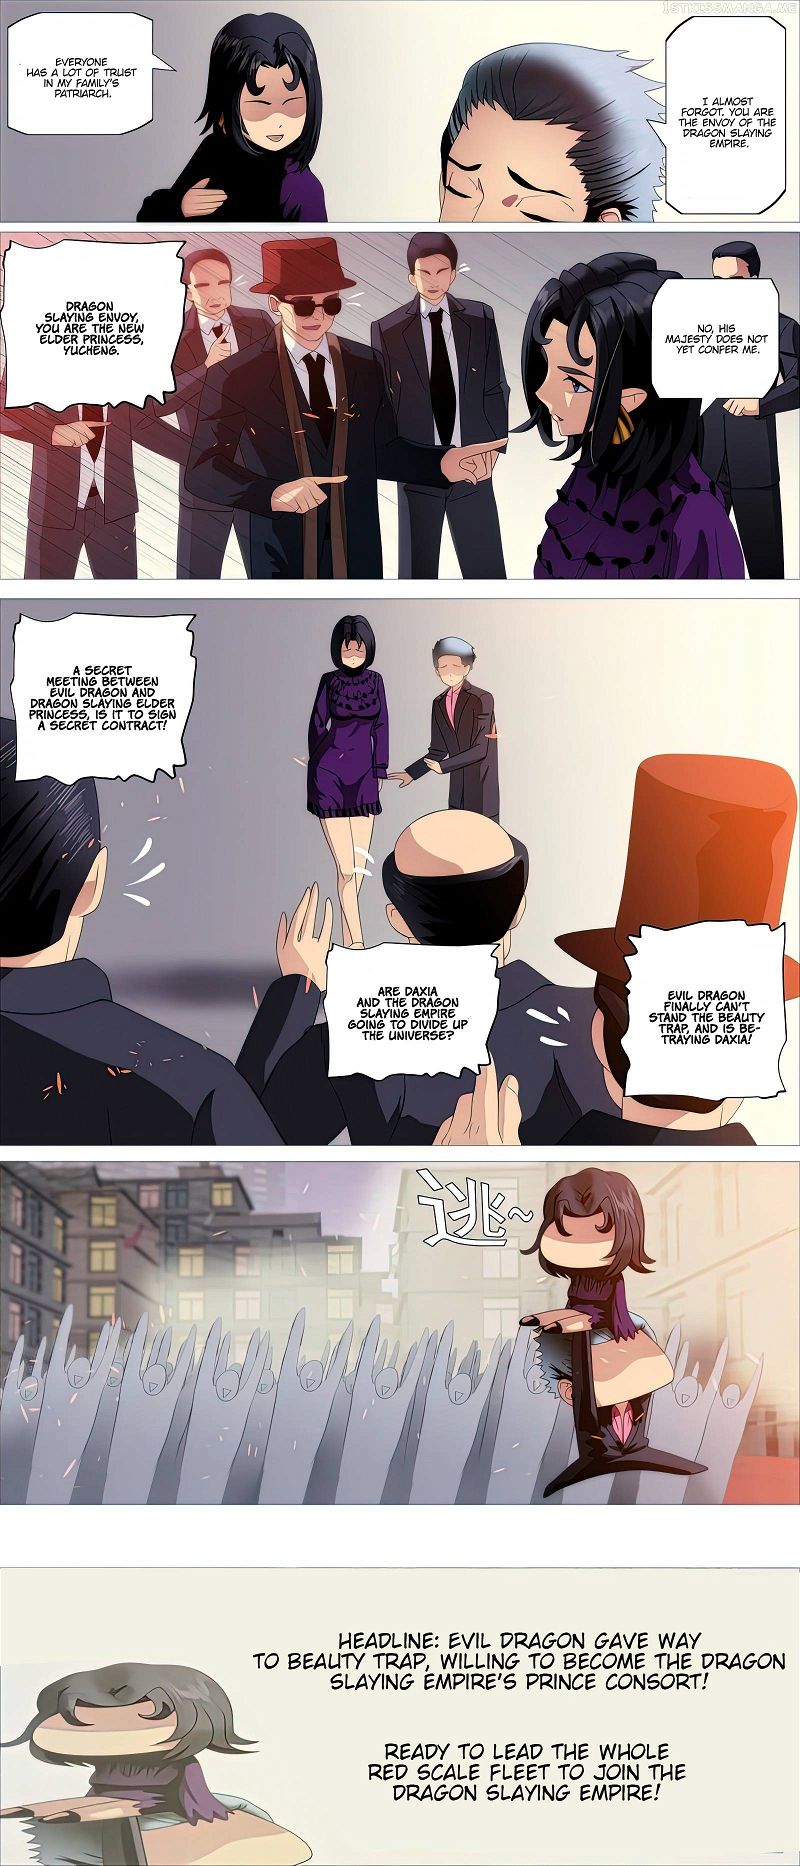 Iron Ladies Chapter 504 page 7 - MangaWeebs.in